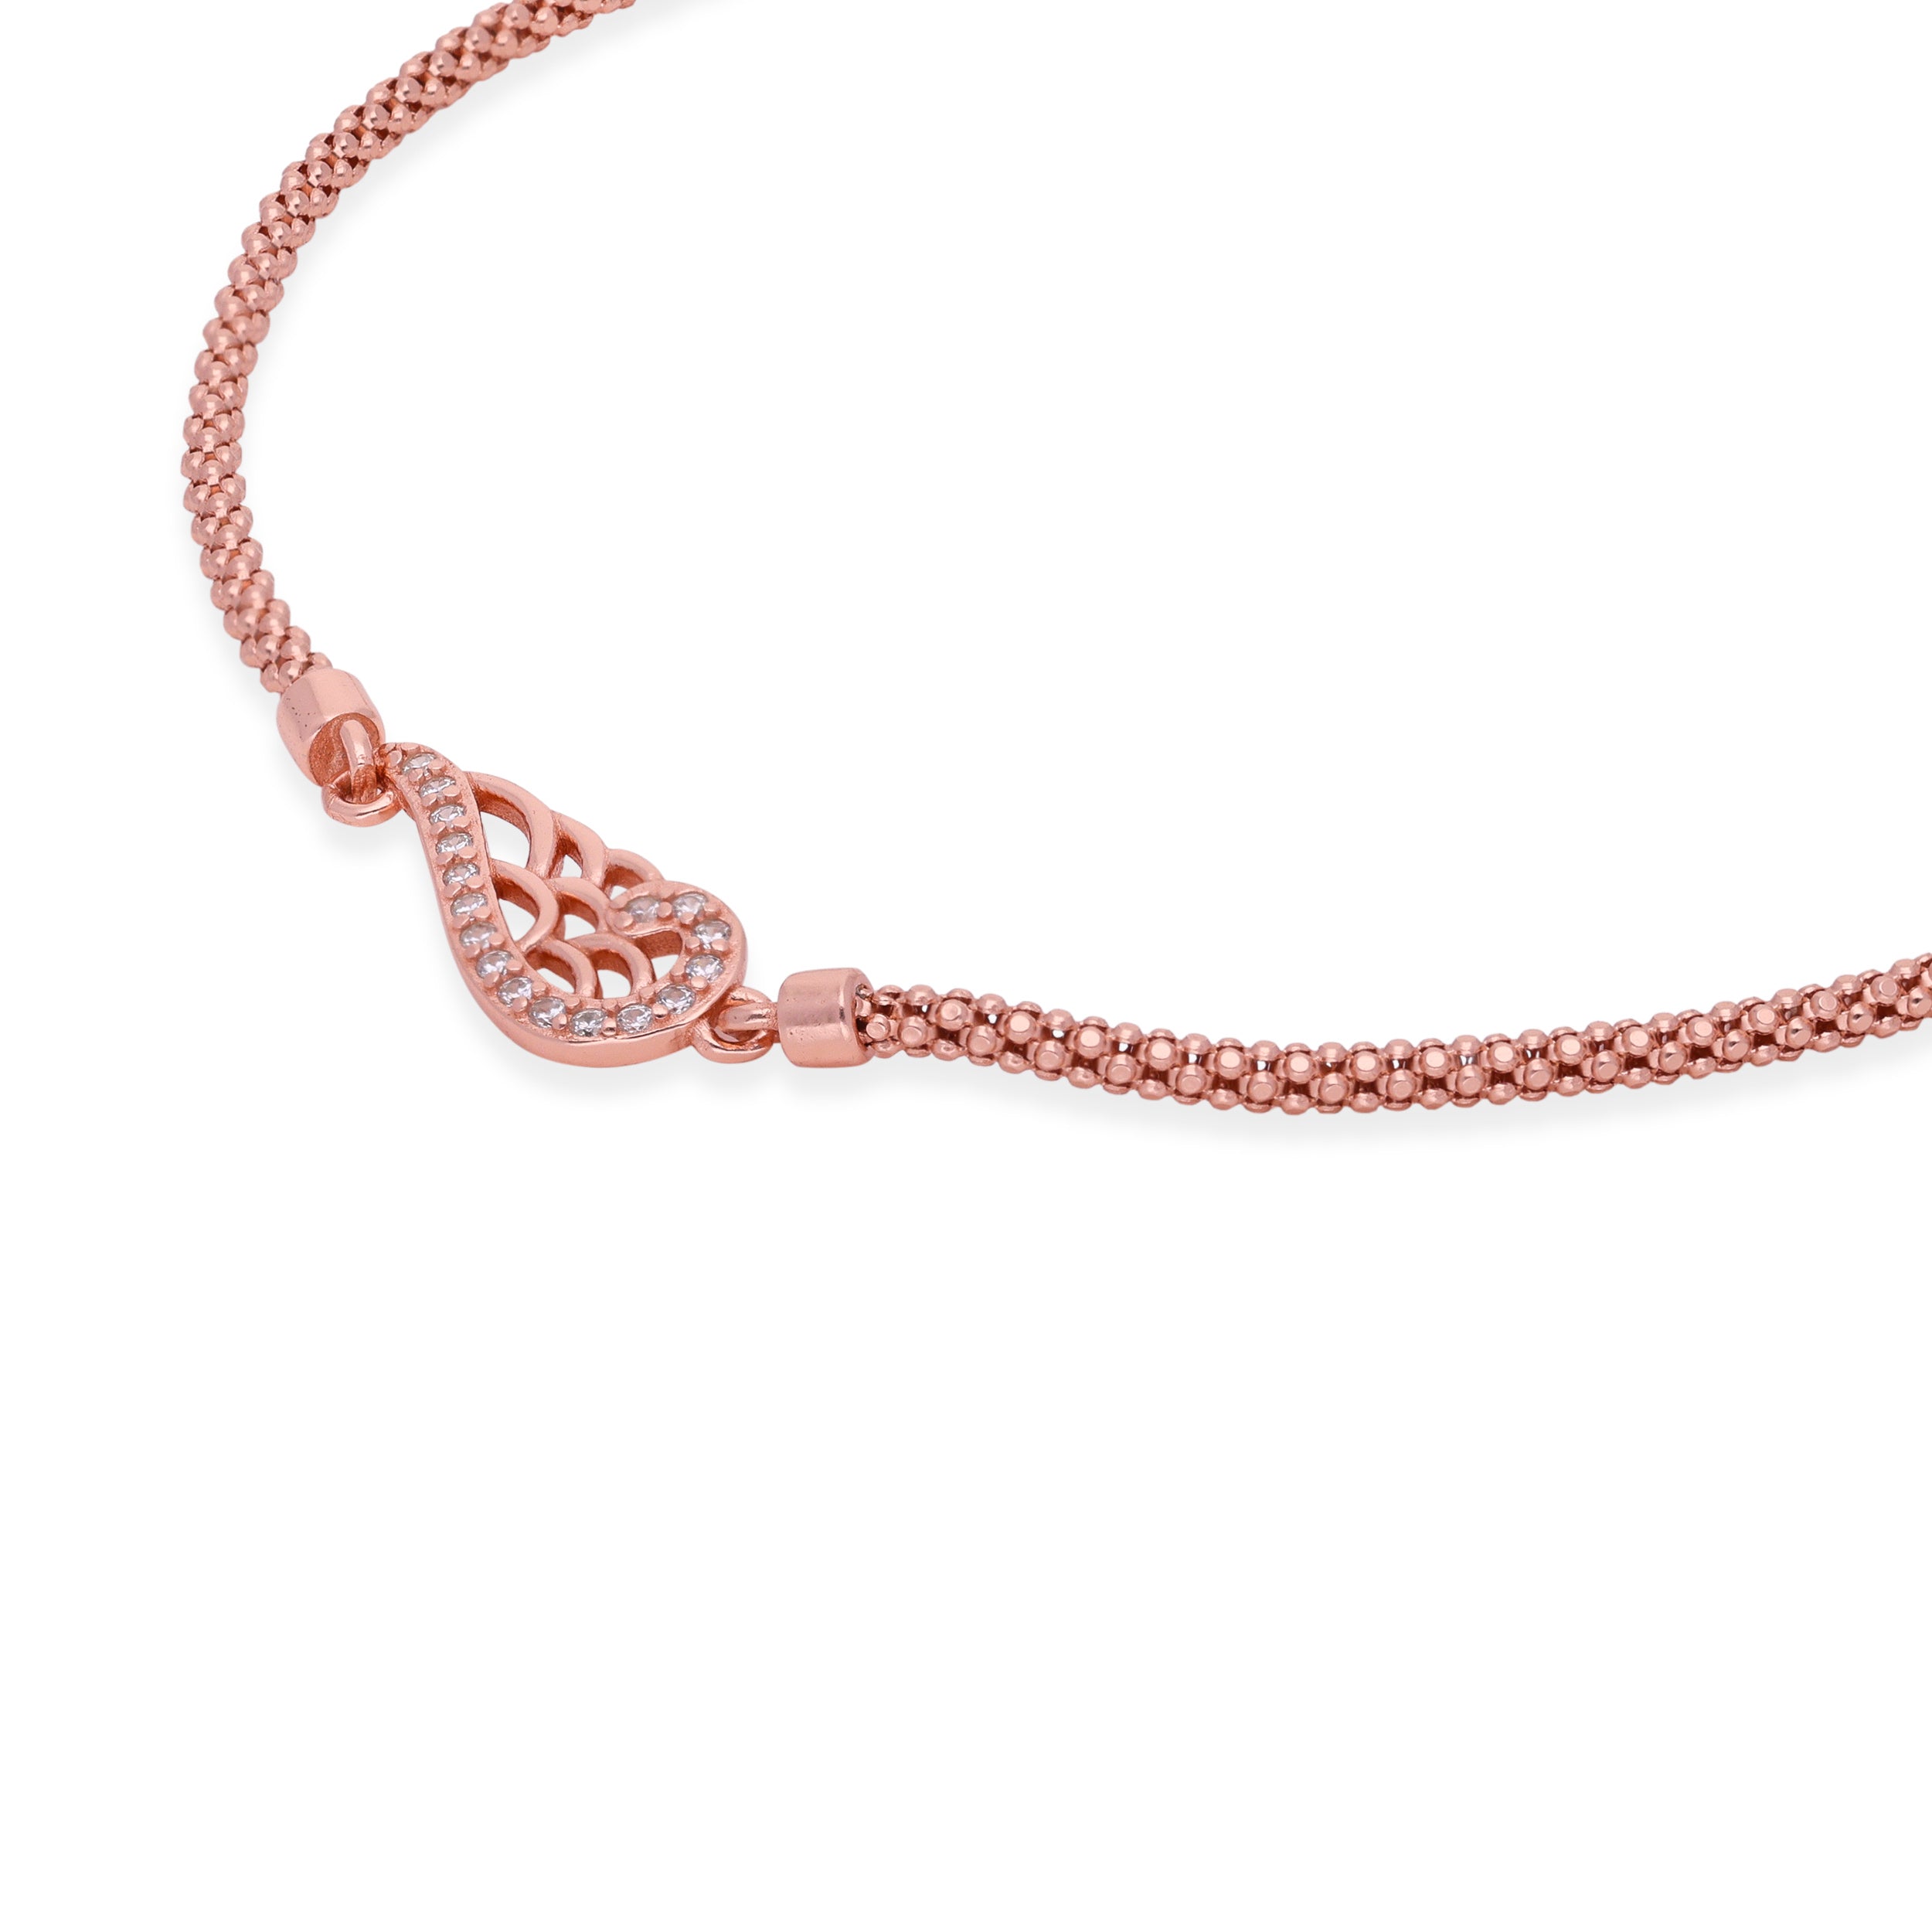 Rose Gold Filigree Heart Bracelet with Diamond Accents | SKU : 0003111642, 0003111703, 0003111666